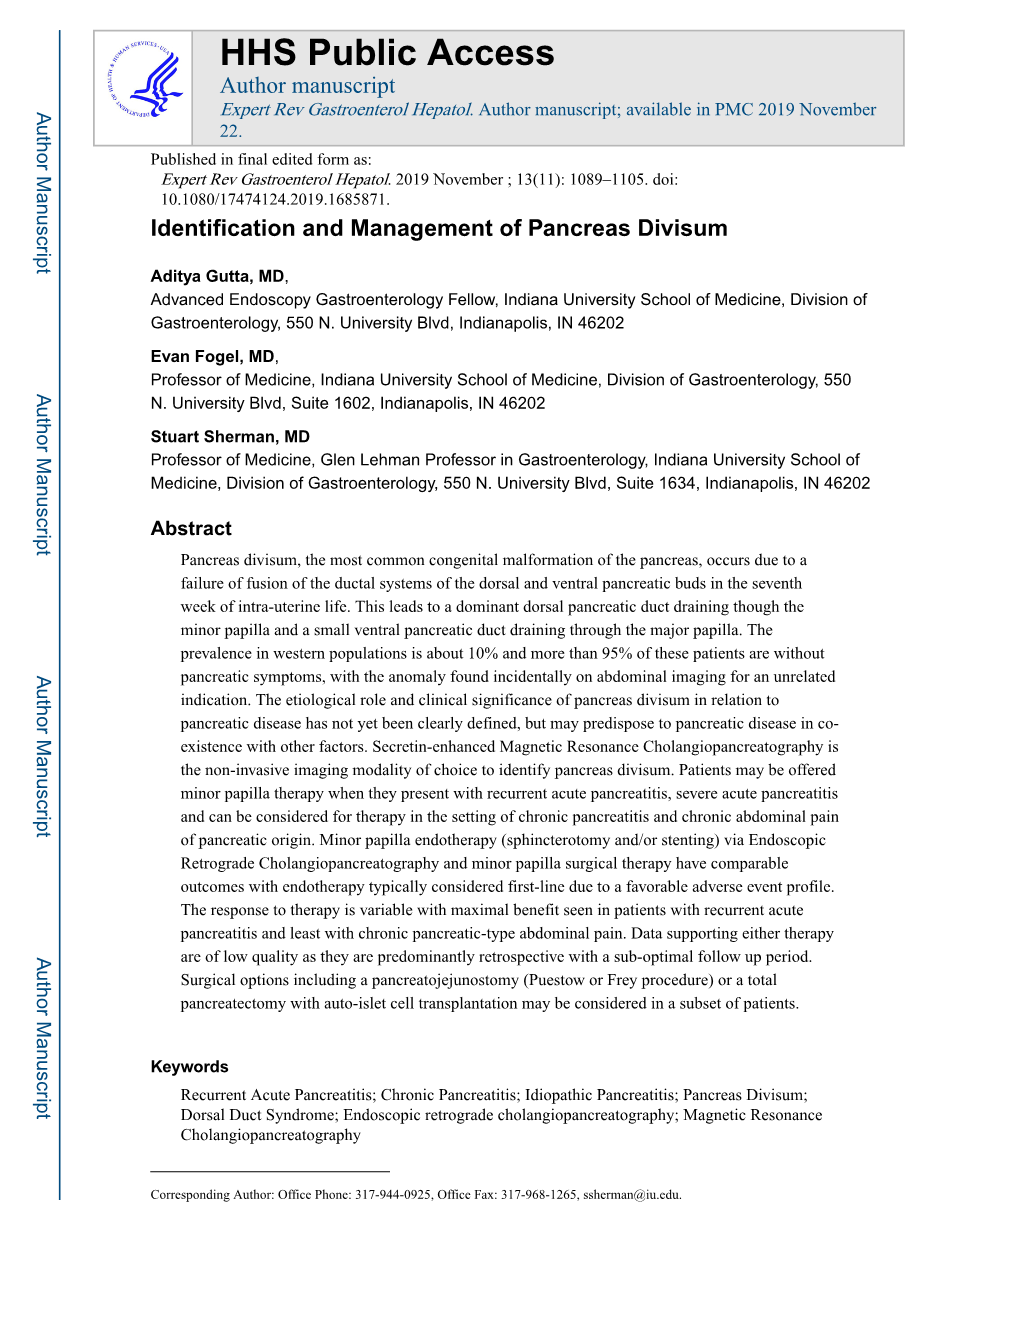 Identification and Management of Pancreas Divisum